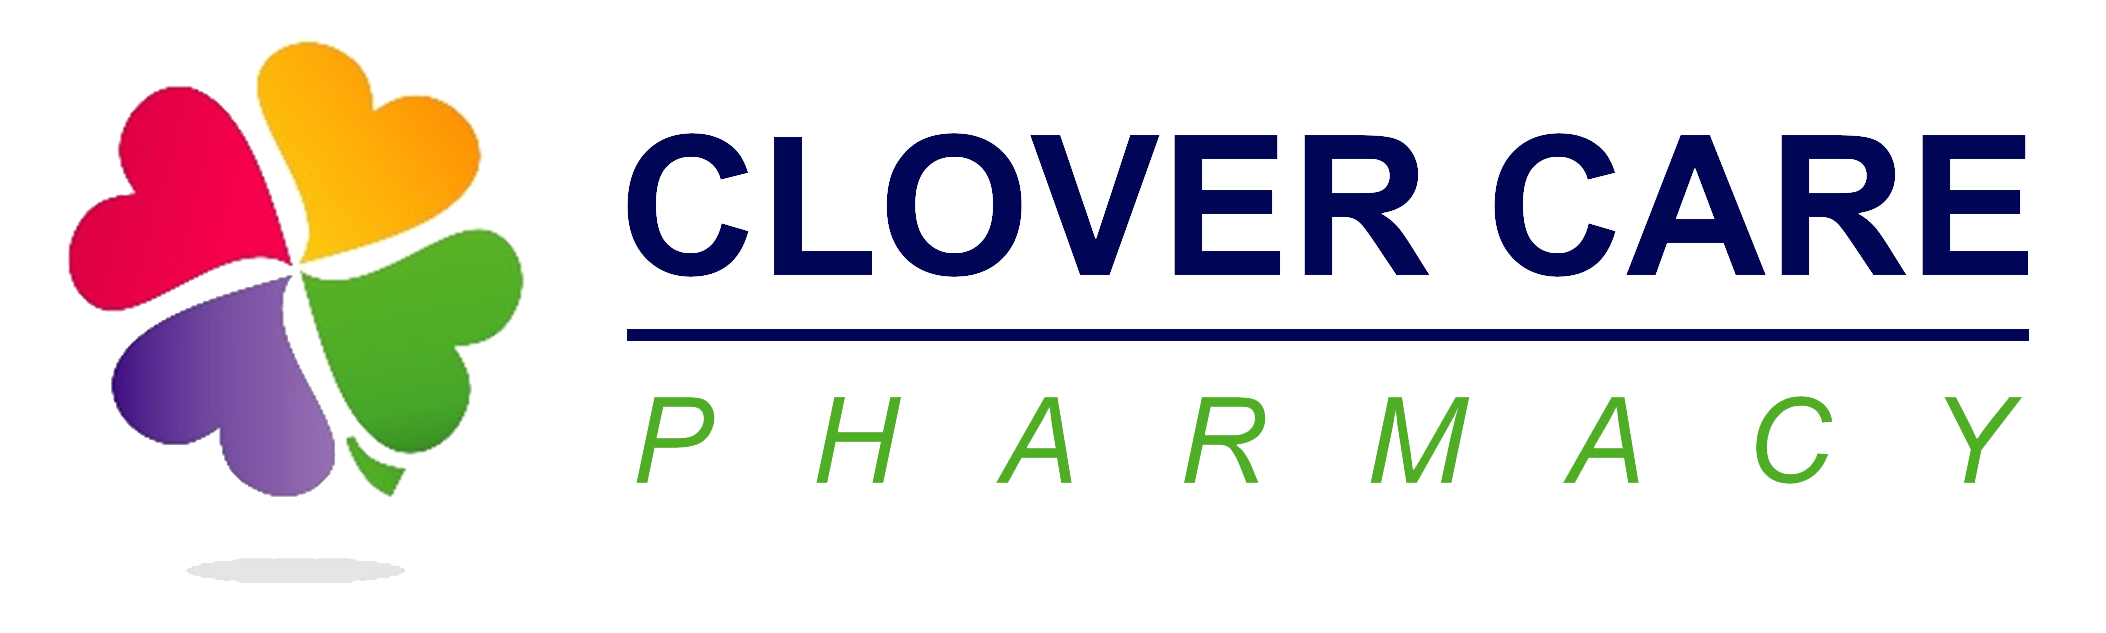 Clover Care Pharmacy